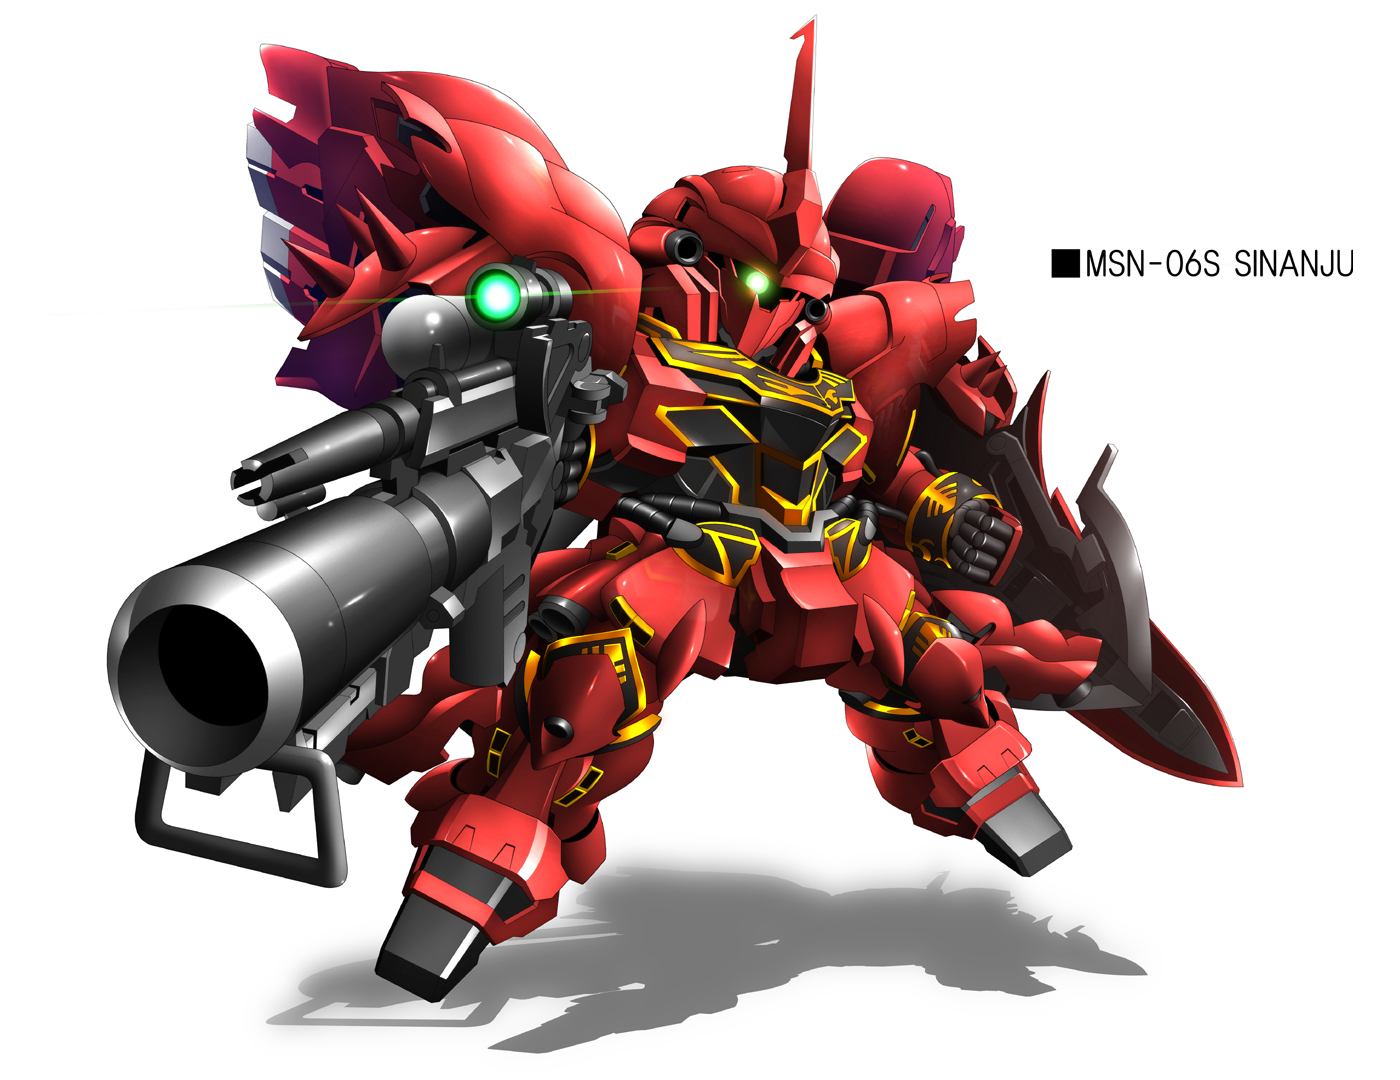 Anime 1400x1080 anime mechs Mobile Suit Gundam Unicorn Sinanju Mobile Suit Super Robot Taisen artwork digital art fan art